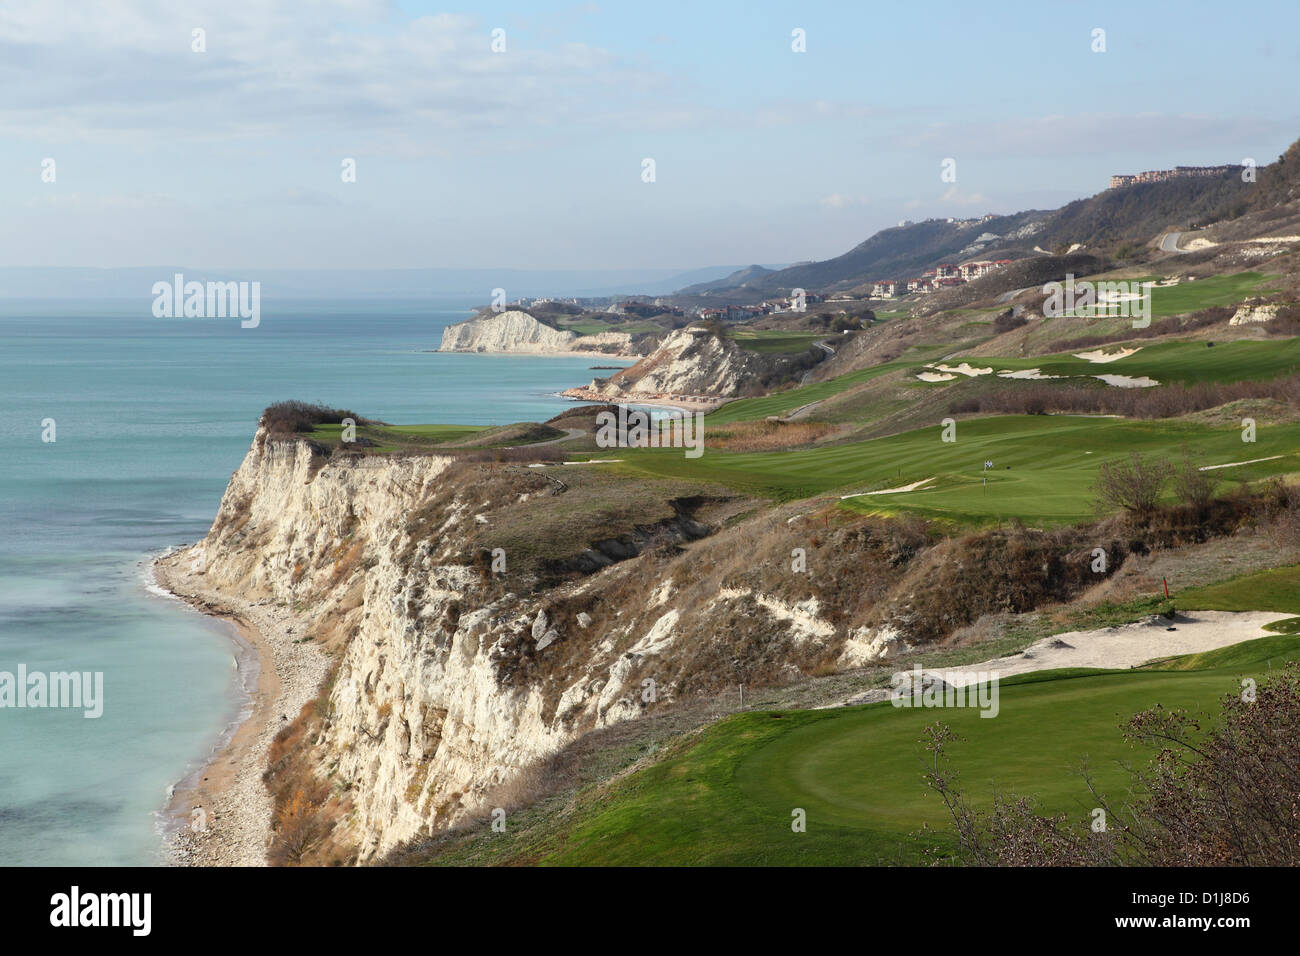 The Thracian Cliffs Golf Course at Varna, Bulgaria Stock Photo - Alamy